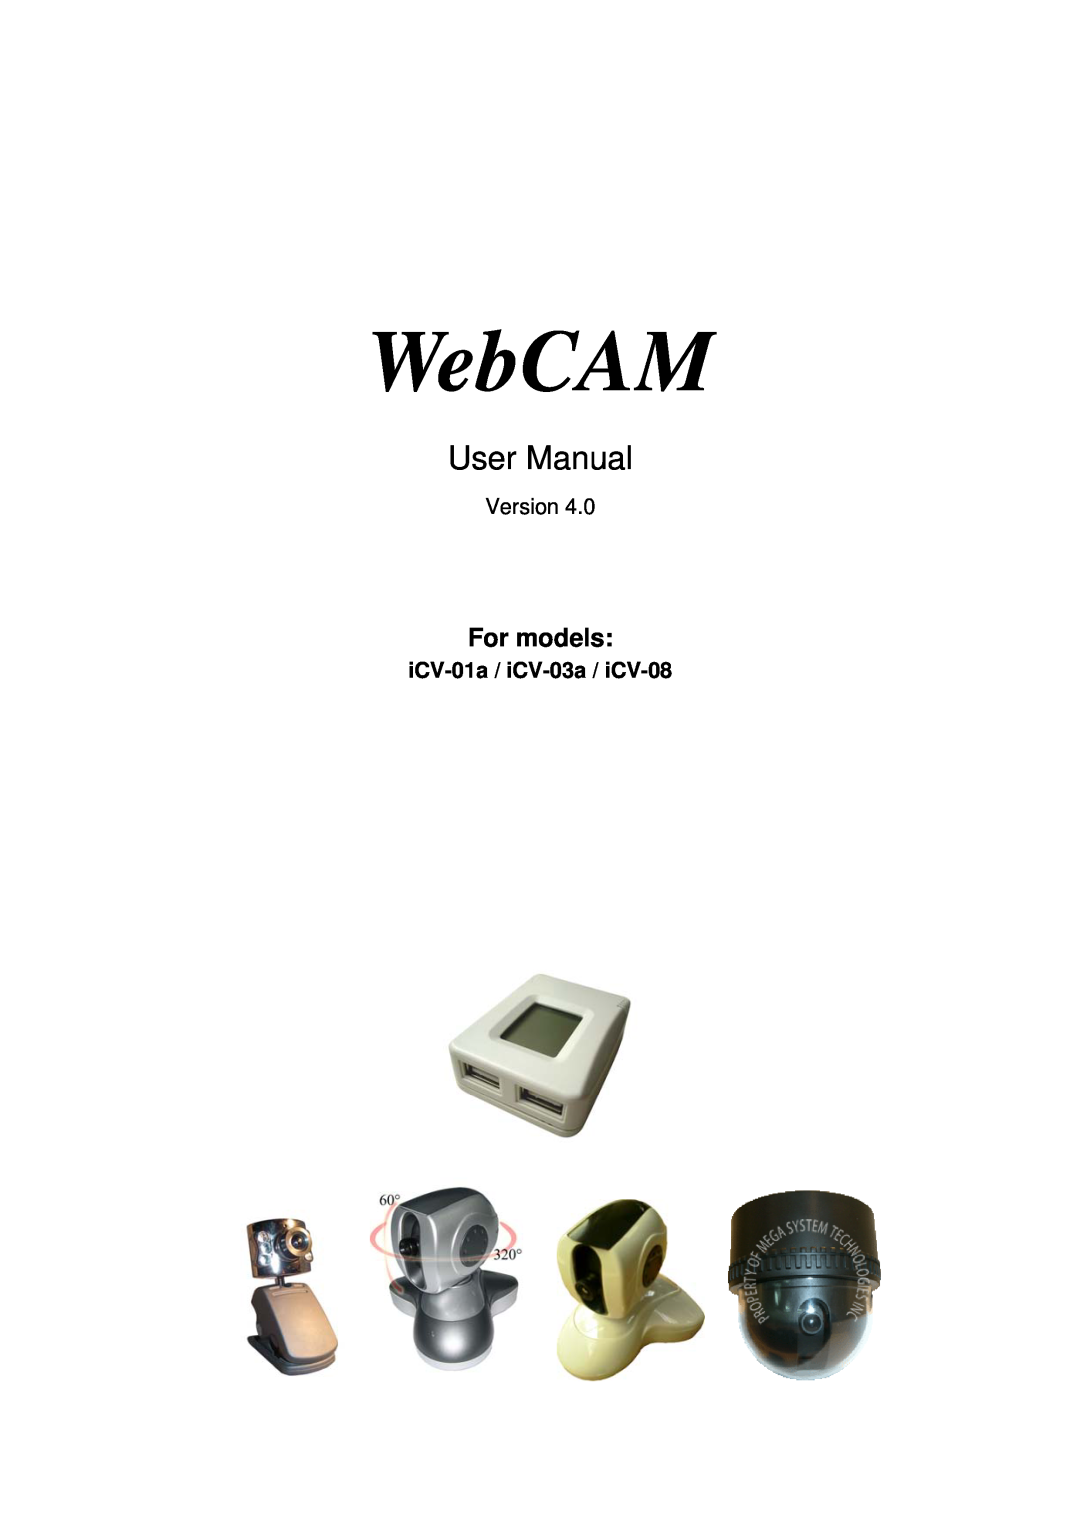 3Com user manual For models, iCV-01a / iCV-03a / iCV-08, WebCAM, User Manual 